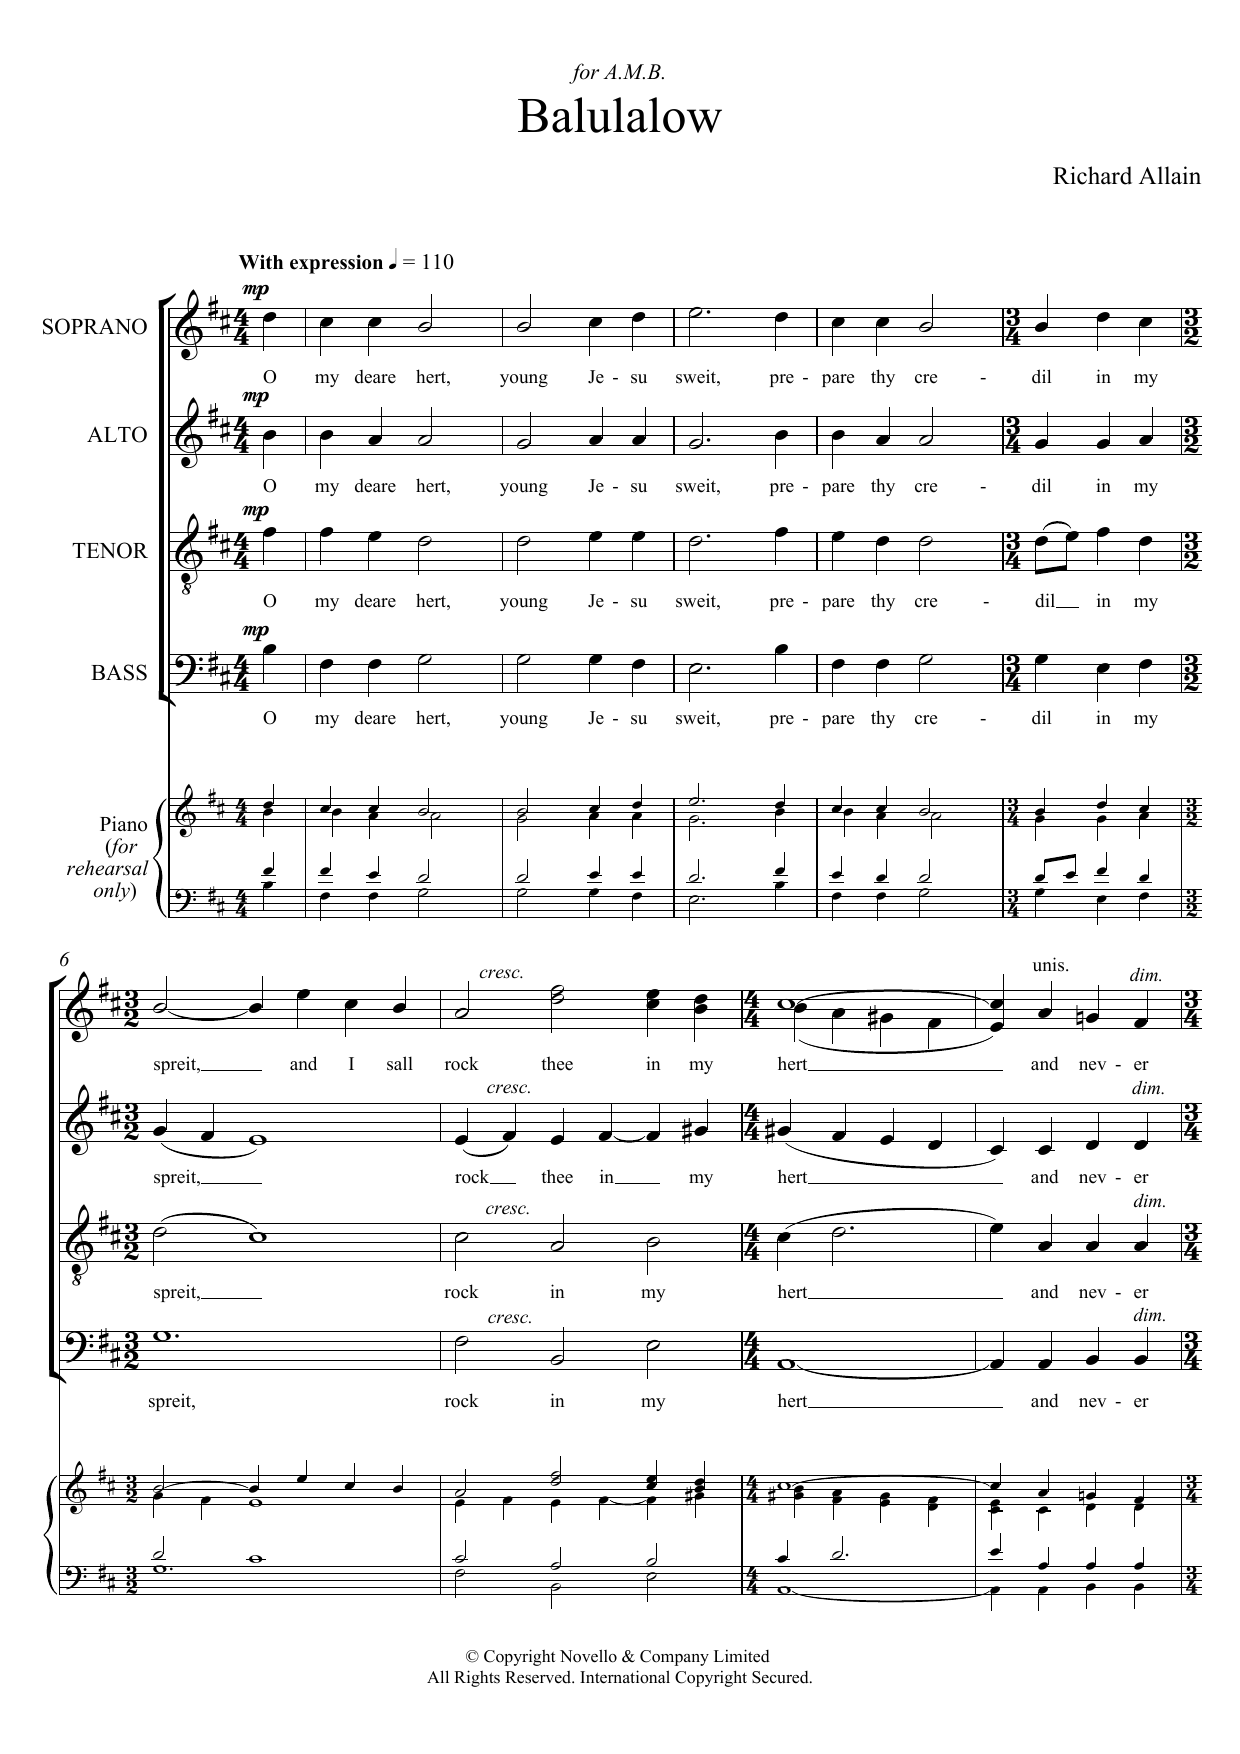 Richard Allain Balulalow Sheet Music Notes & Chords for Choir - Download or Print PDF